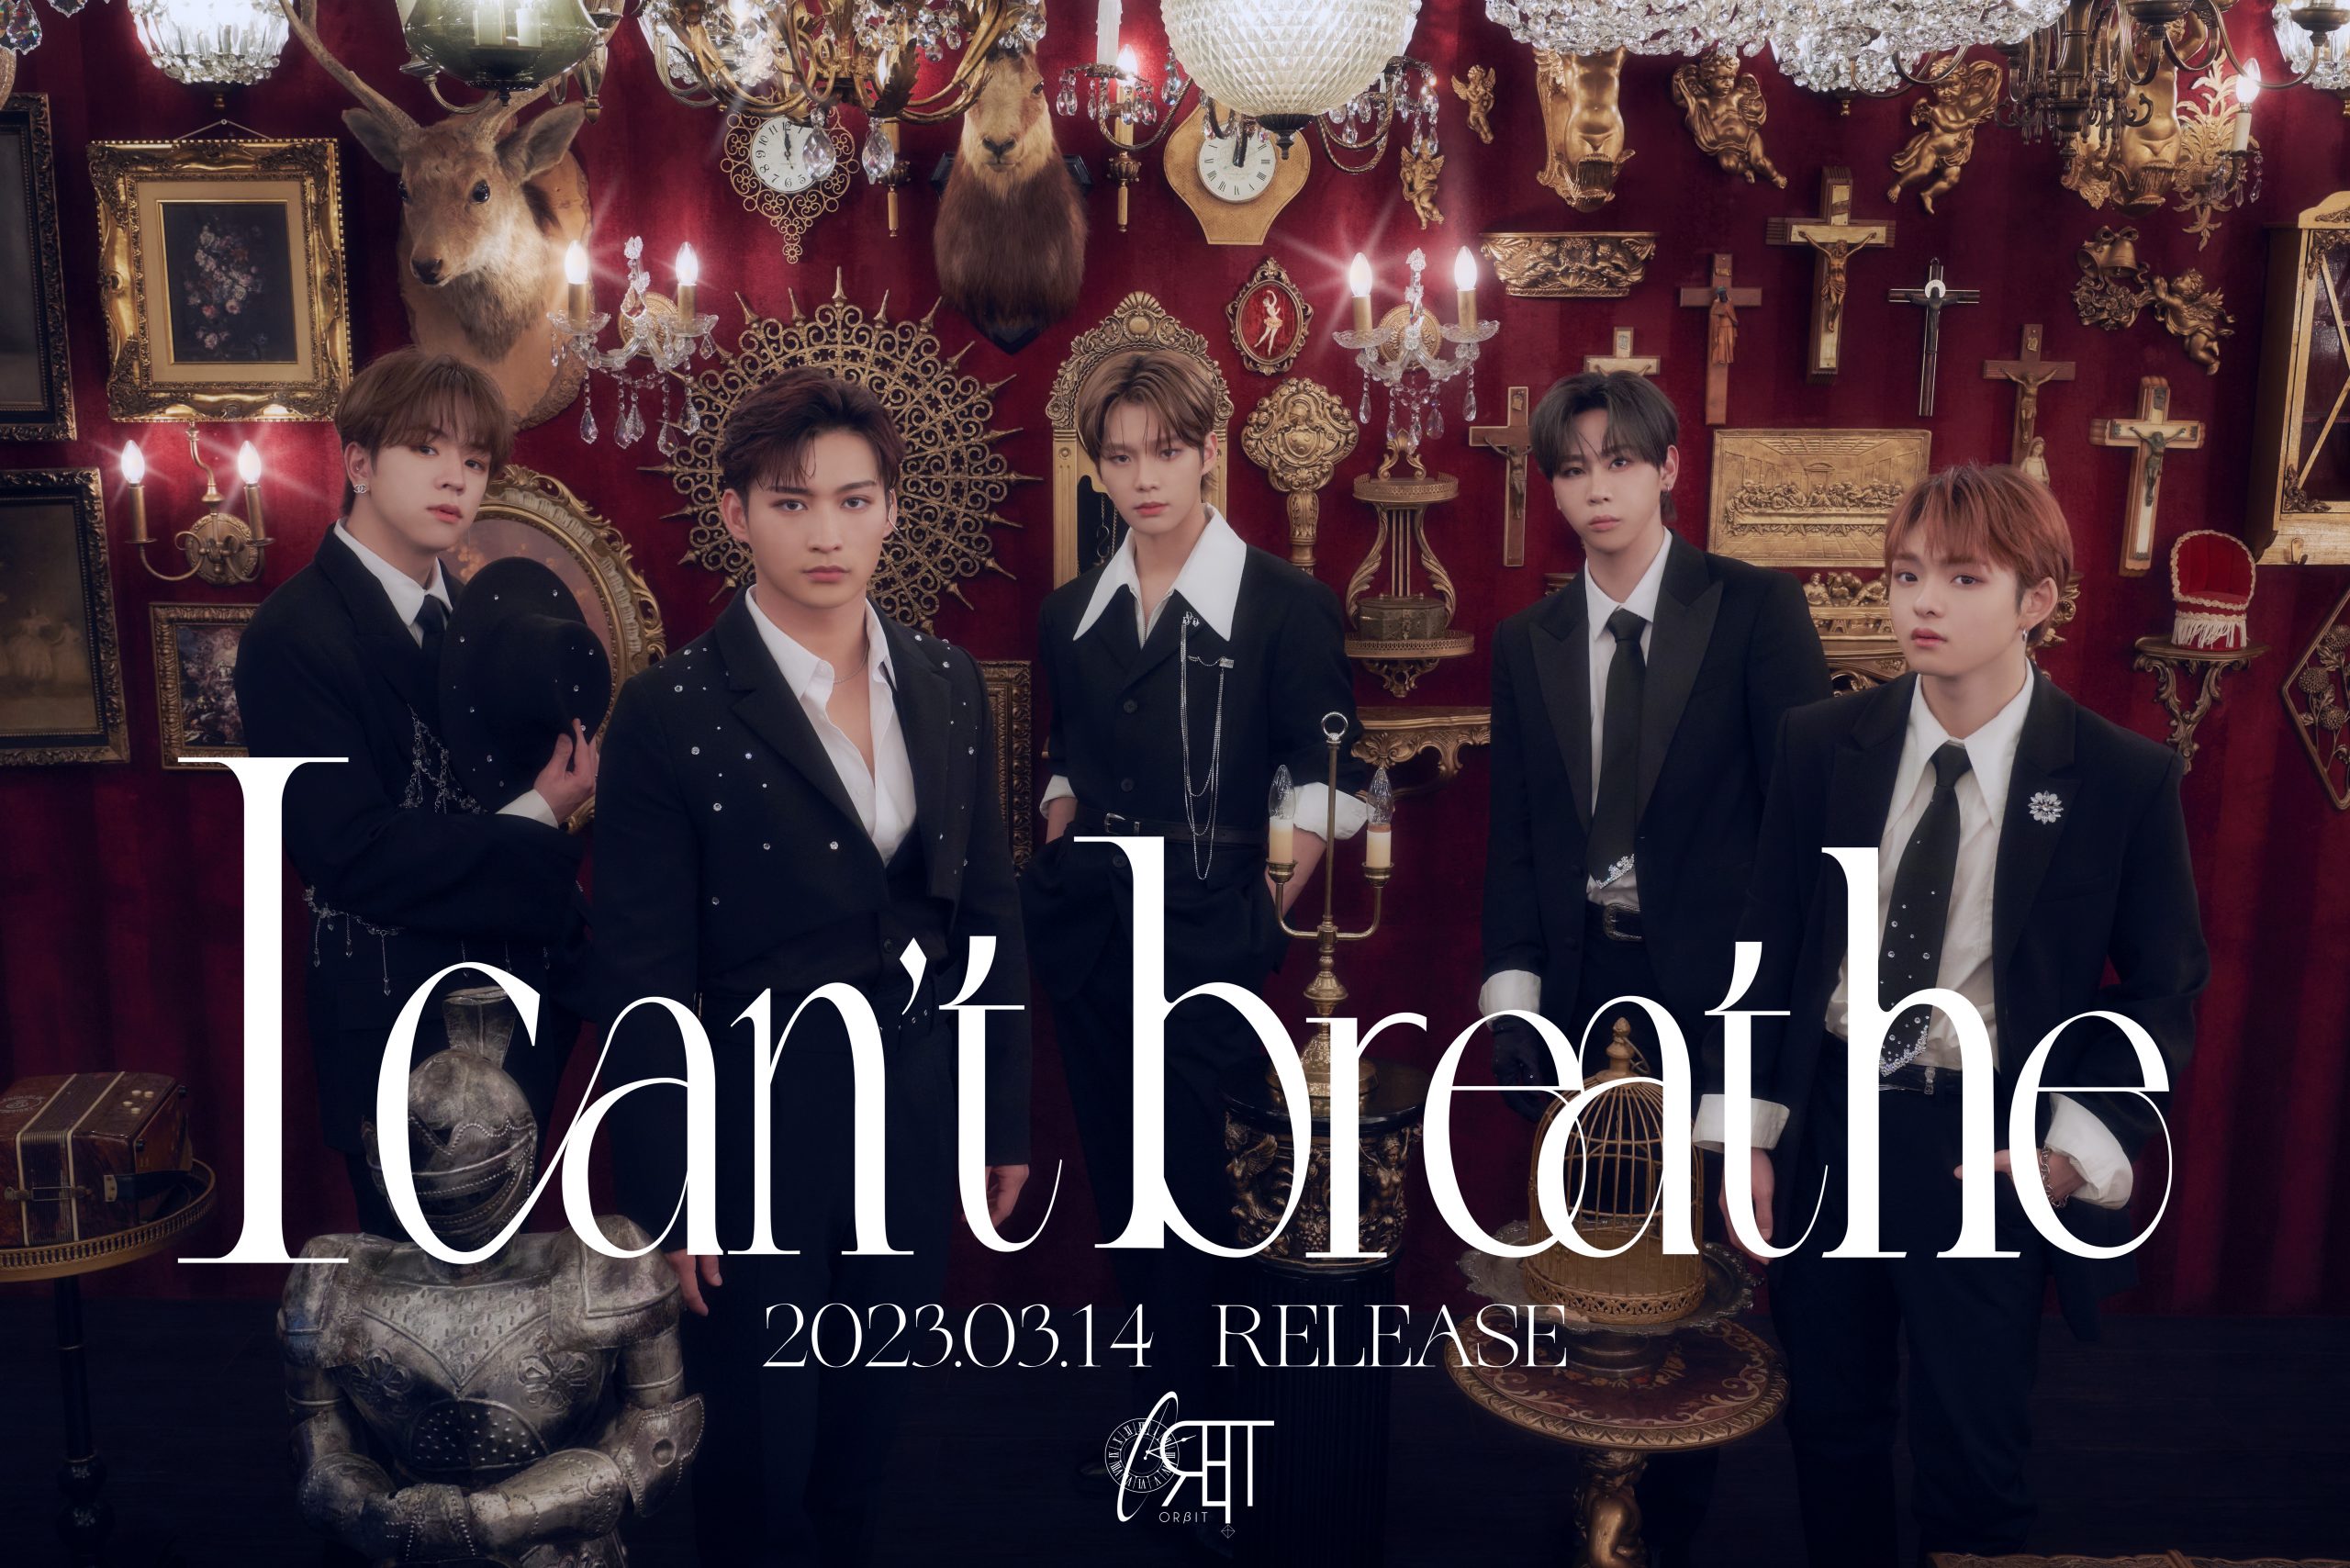 ORβIT 3月14日発売ニューシングル「I can't breathe」ジャケット＆キー ...